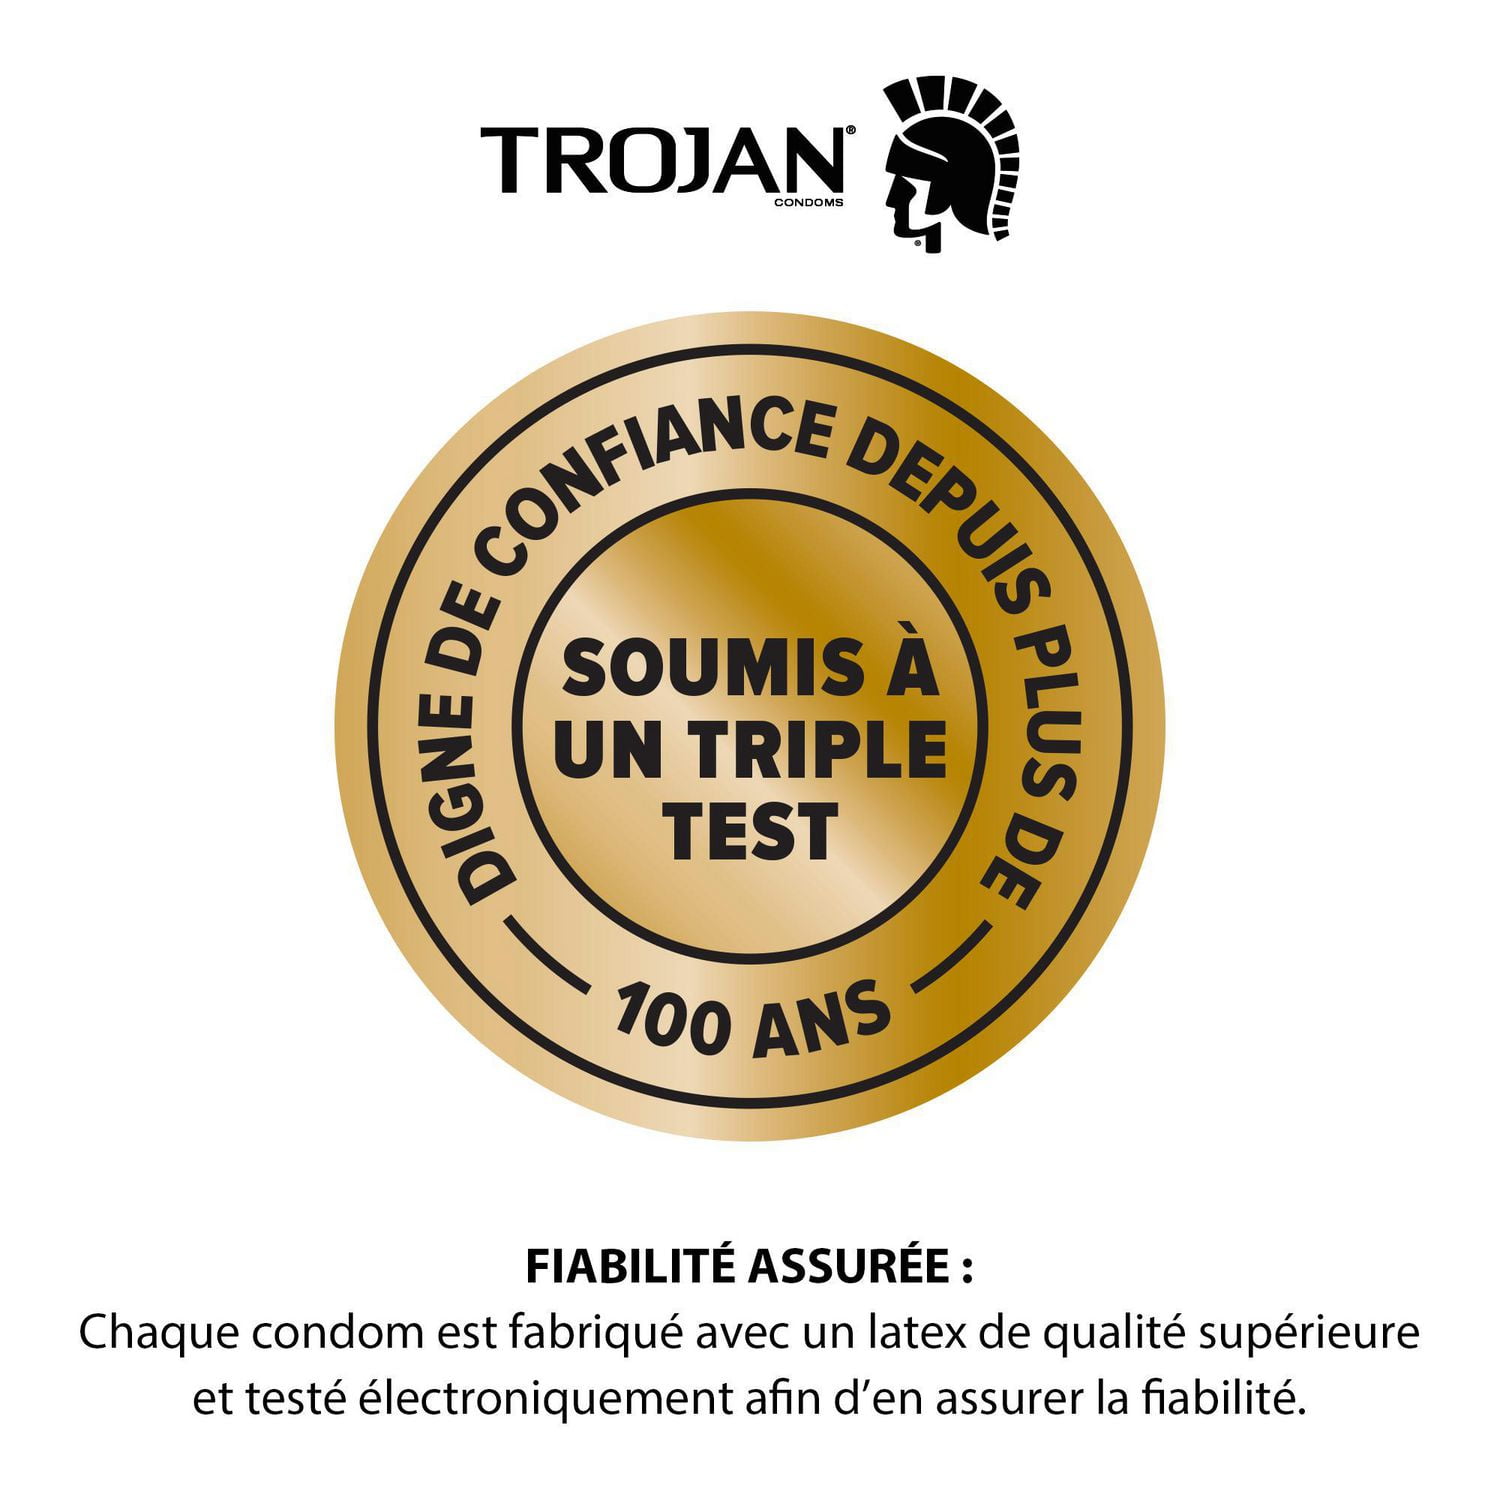 Trojan Magnum XL Extra Large Lubricated Latex Condoms